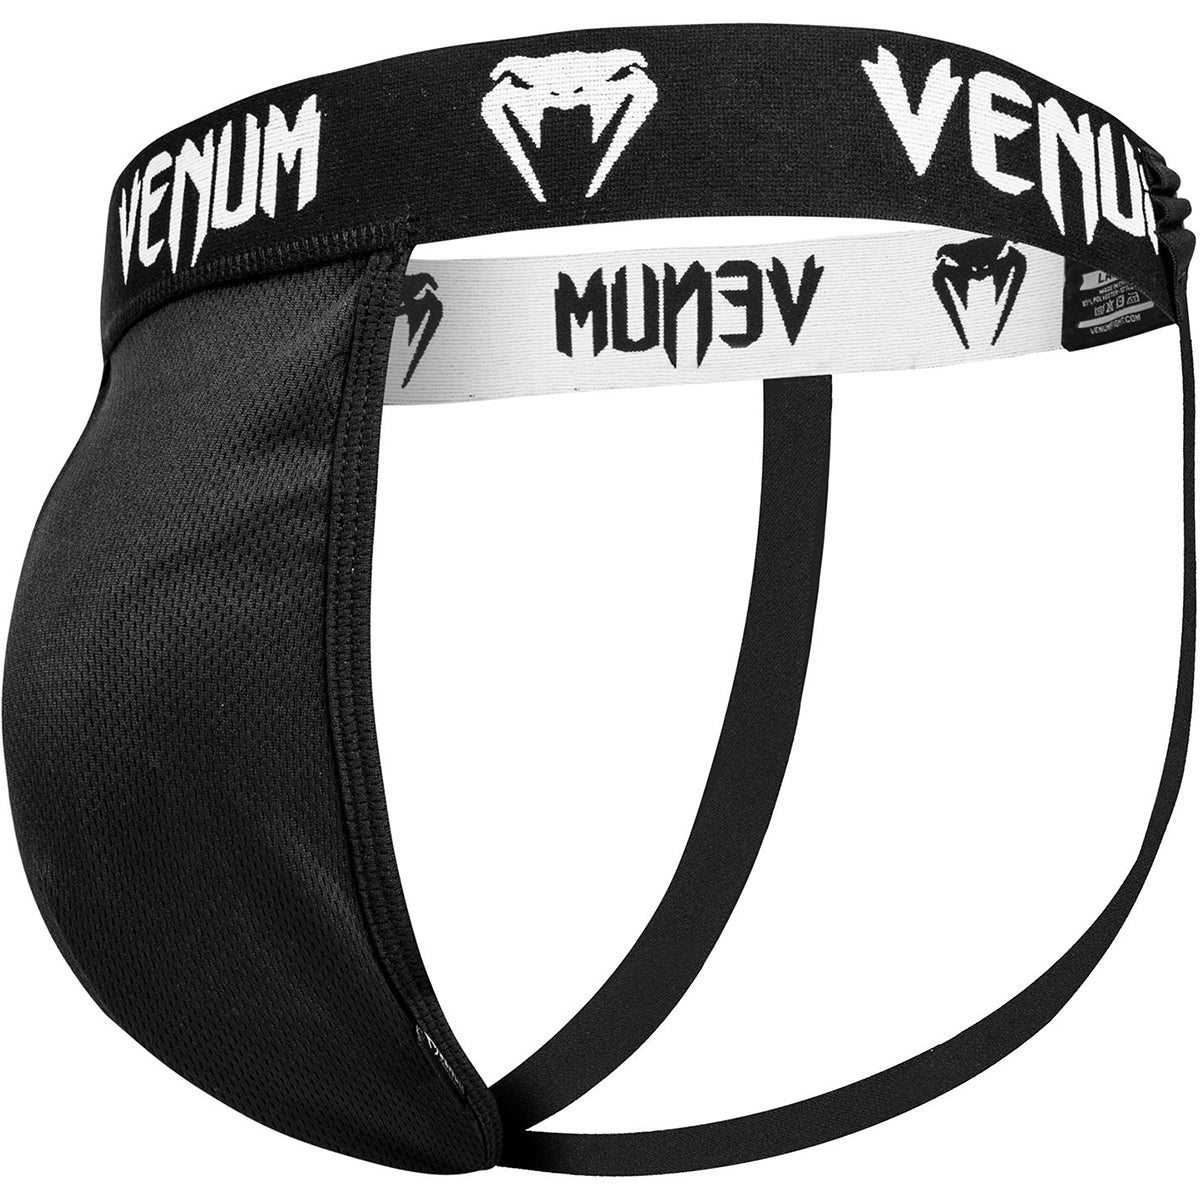 Venum Challenger Groin Guard and Support - Black/White Venum